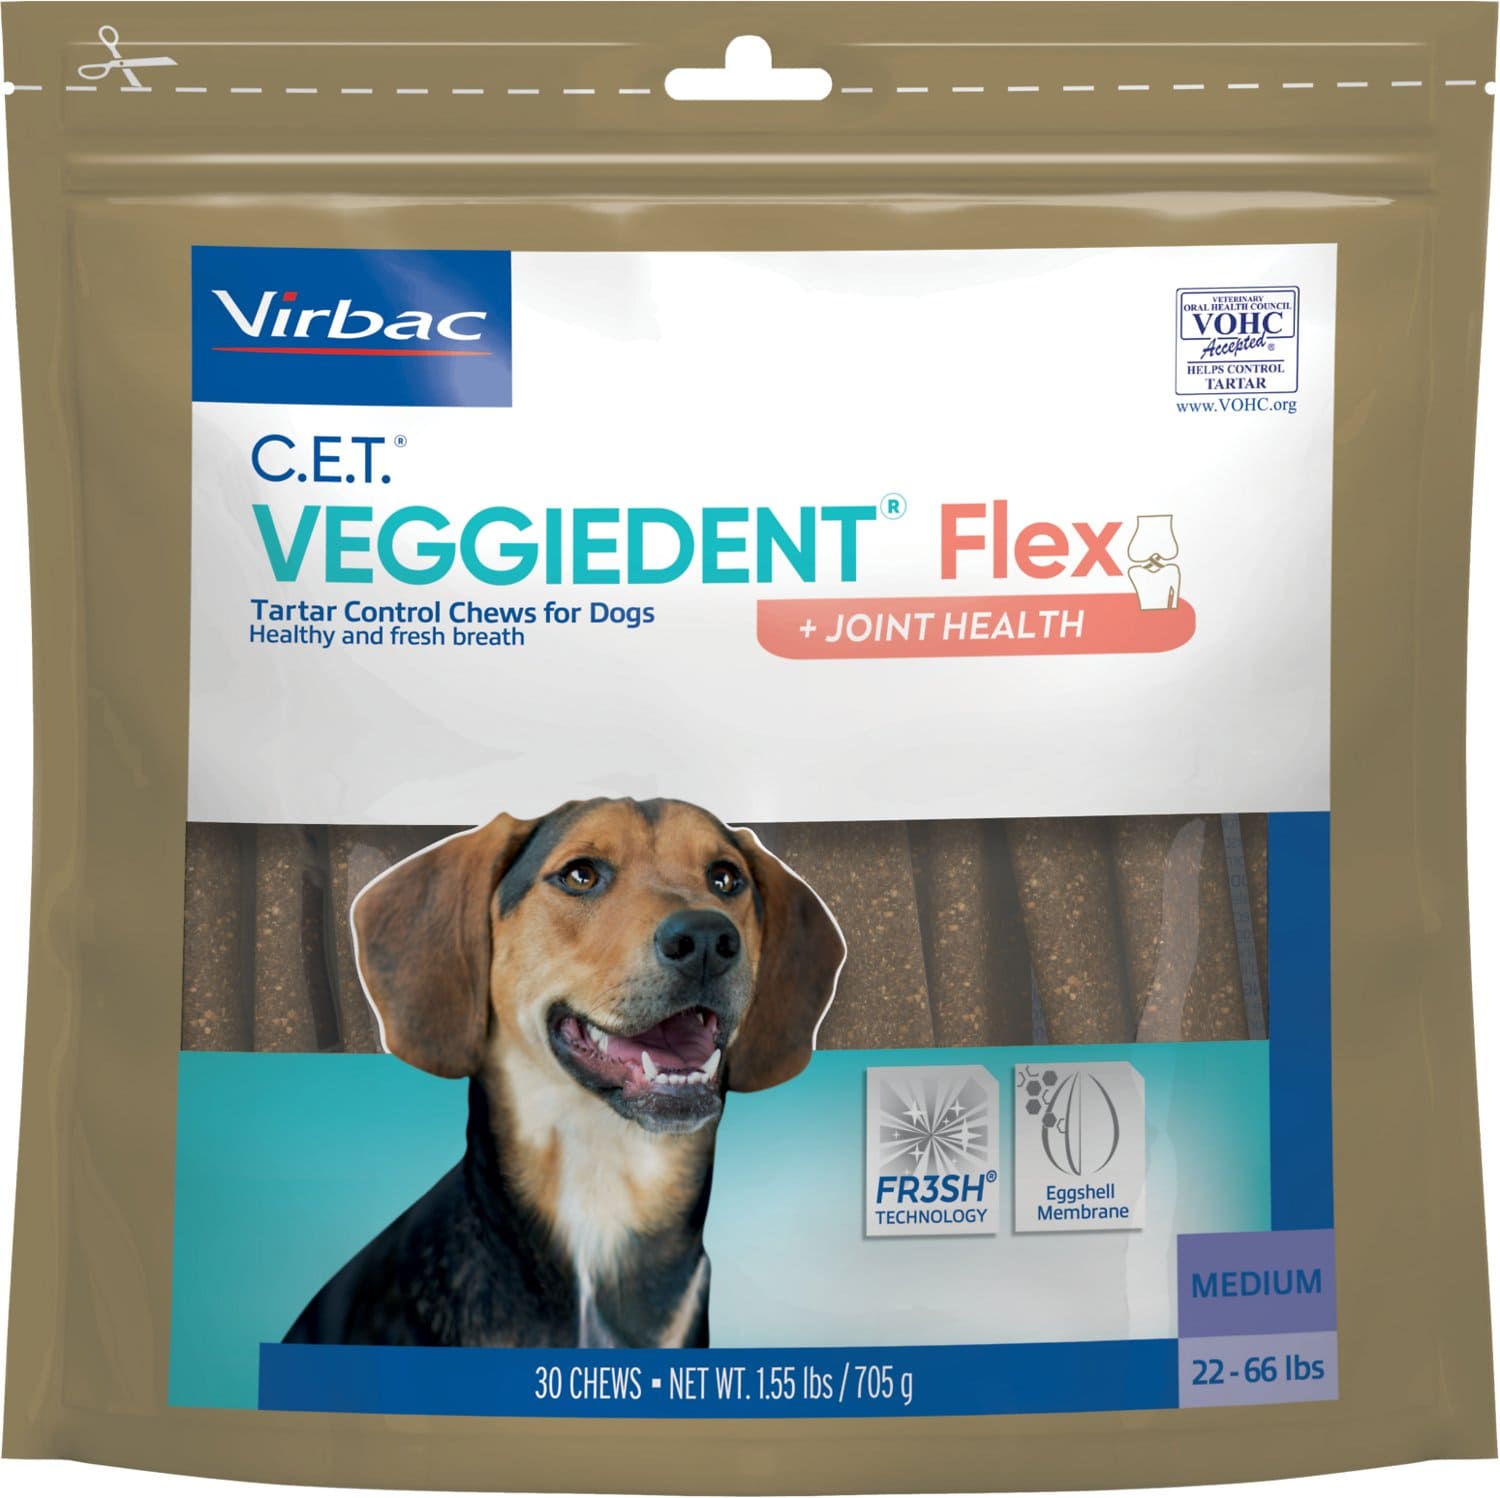 C.E.T. VeggieDent Flex + Salud Articular for medium dogs 22-66 lbs 30 chews 1